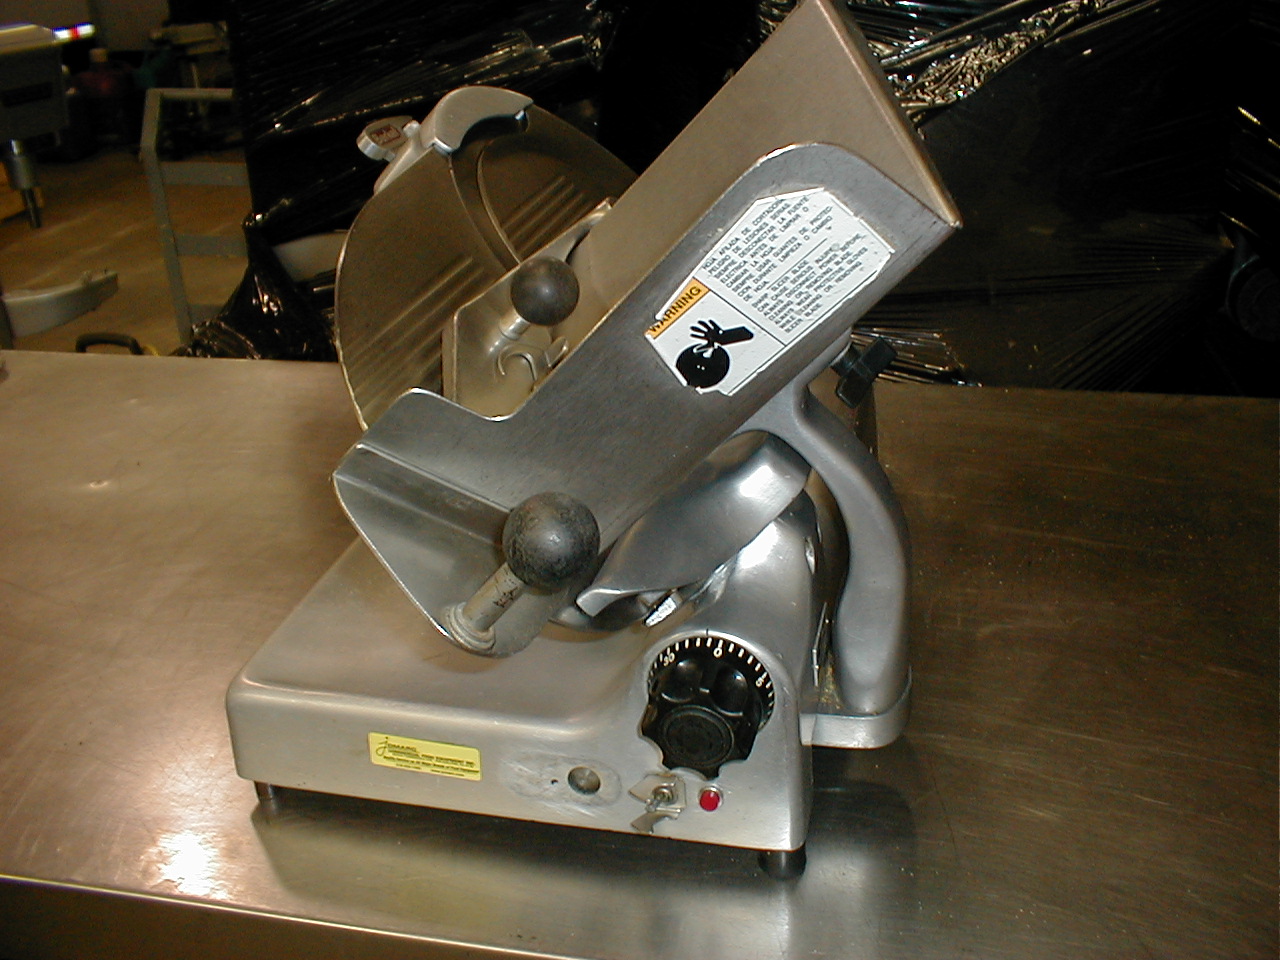 Used Berkel slicer model 807 12 inch blade.